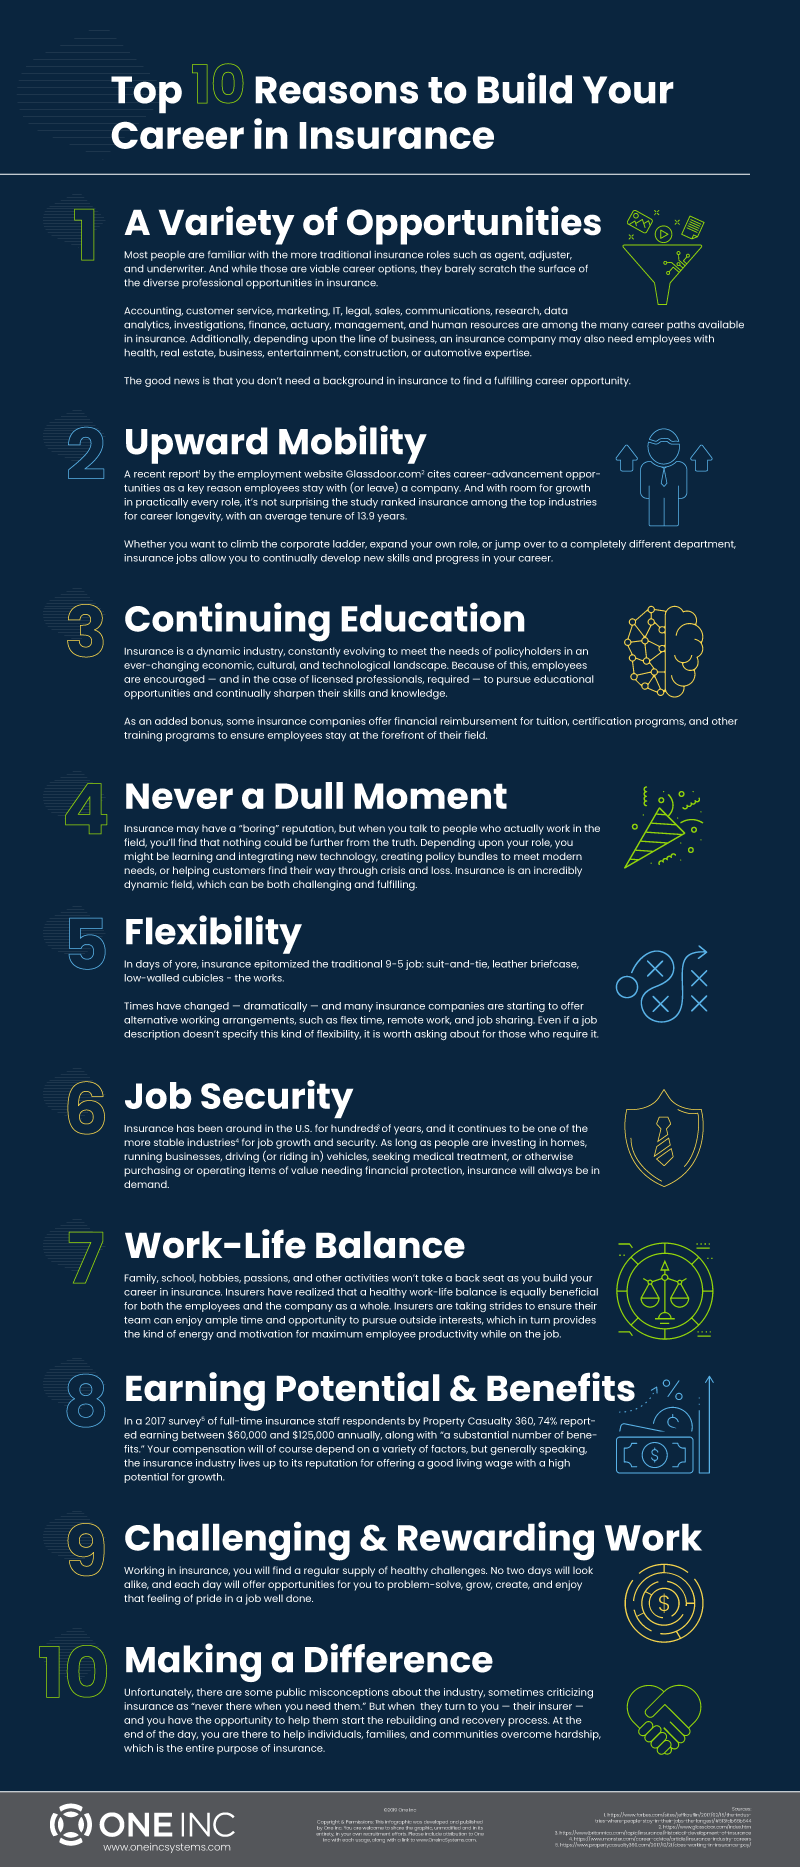 Top-10-Reasons-Work-in-Insurance